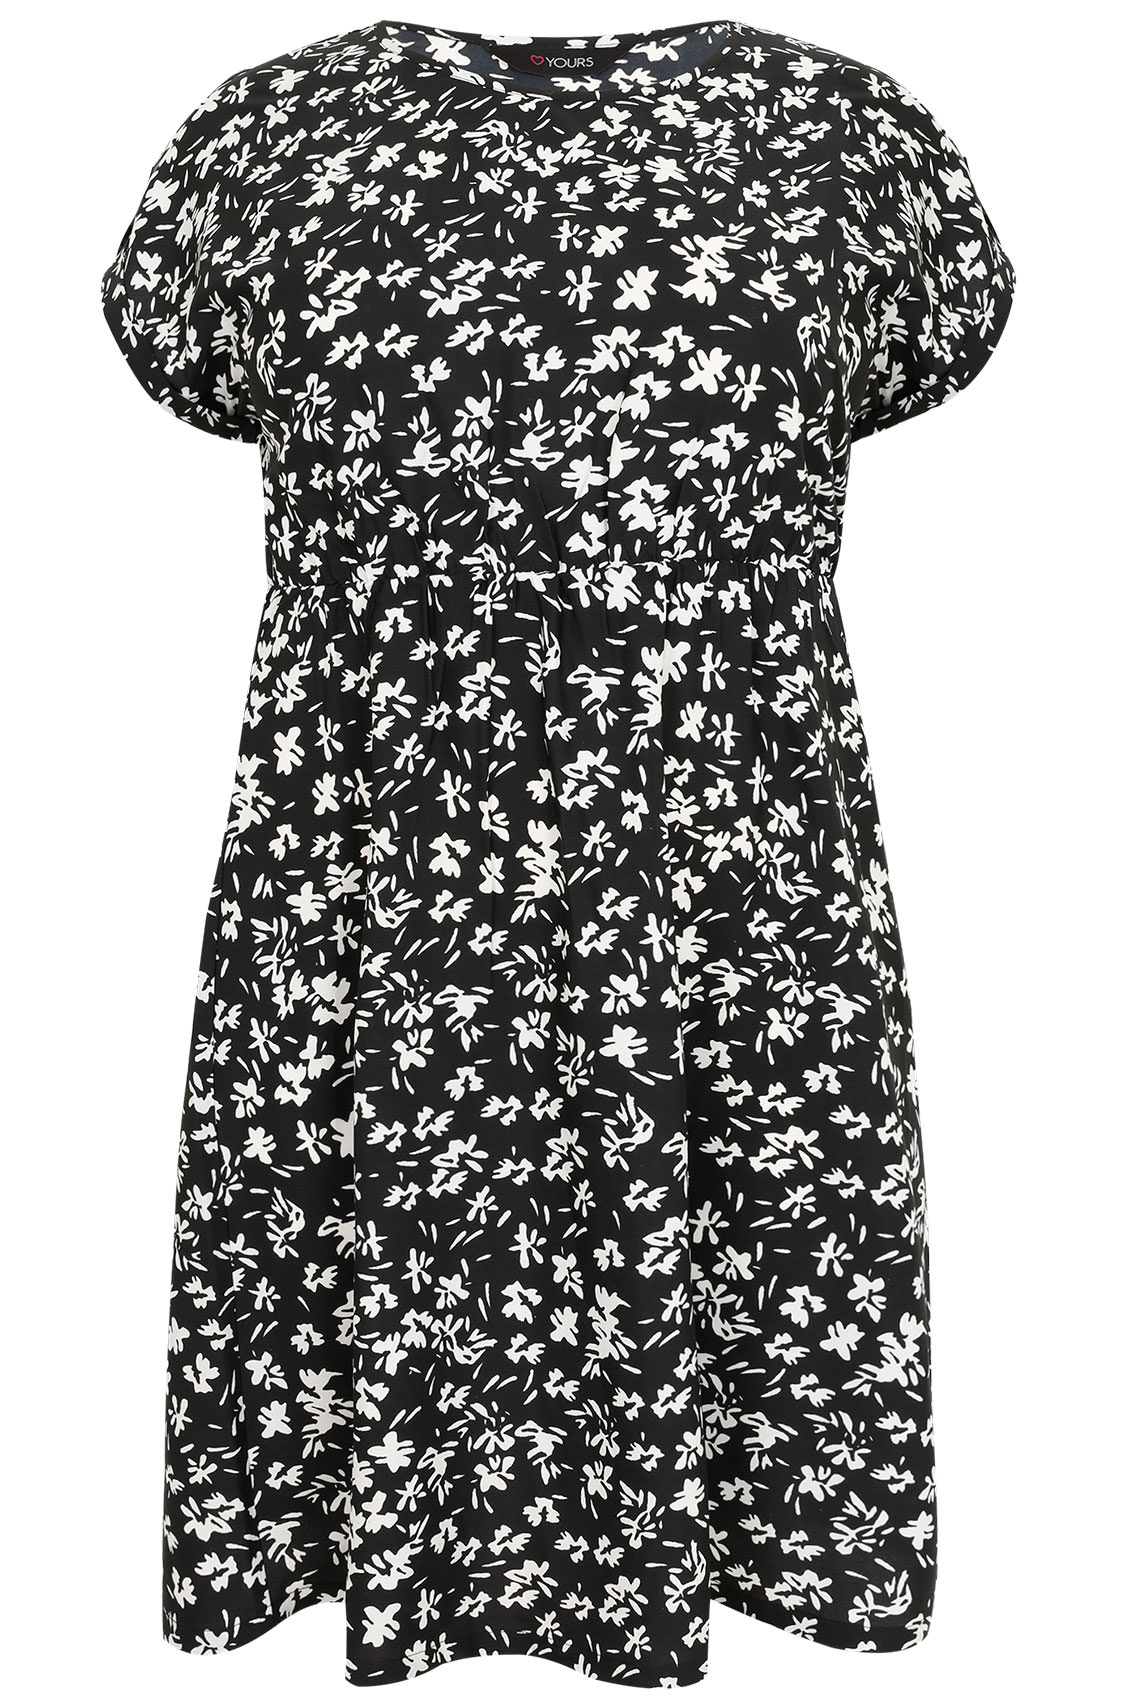 Black & White Floral Print Skater Dress With Short Turn-back Sleeves ...